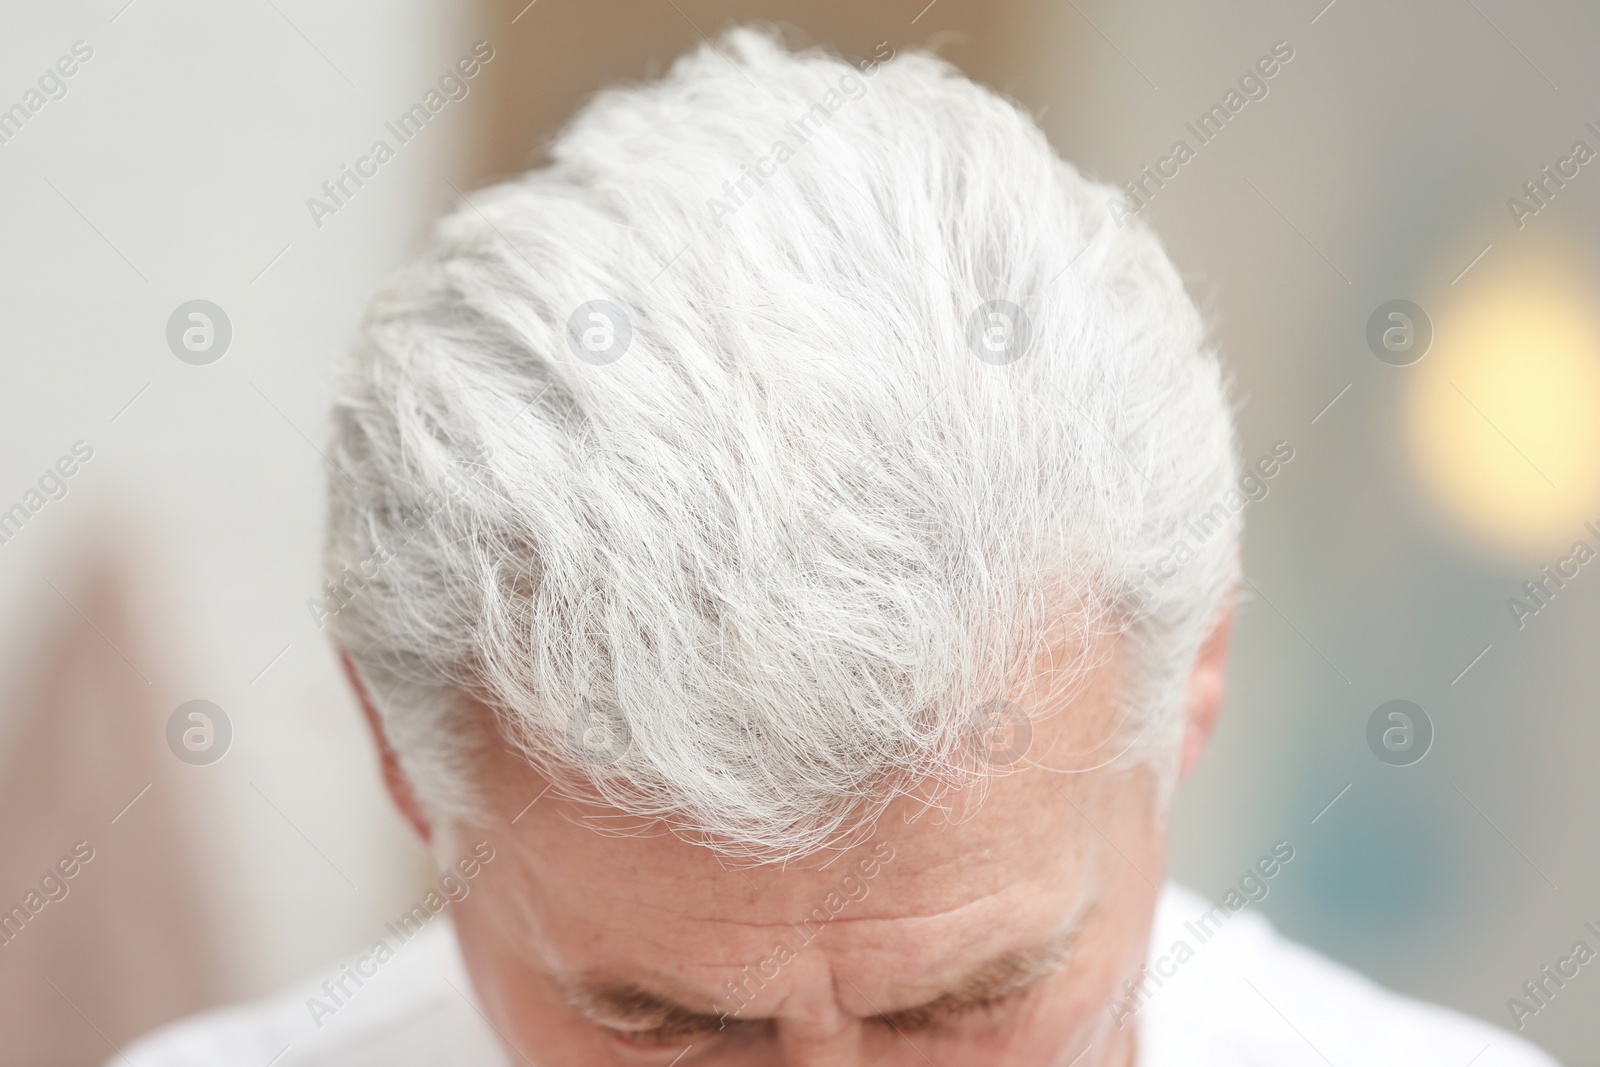 Photo of Senior man with hair loss problem indoors, closeup